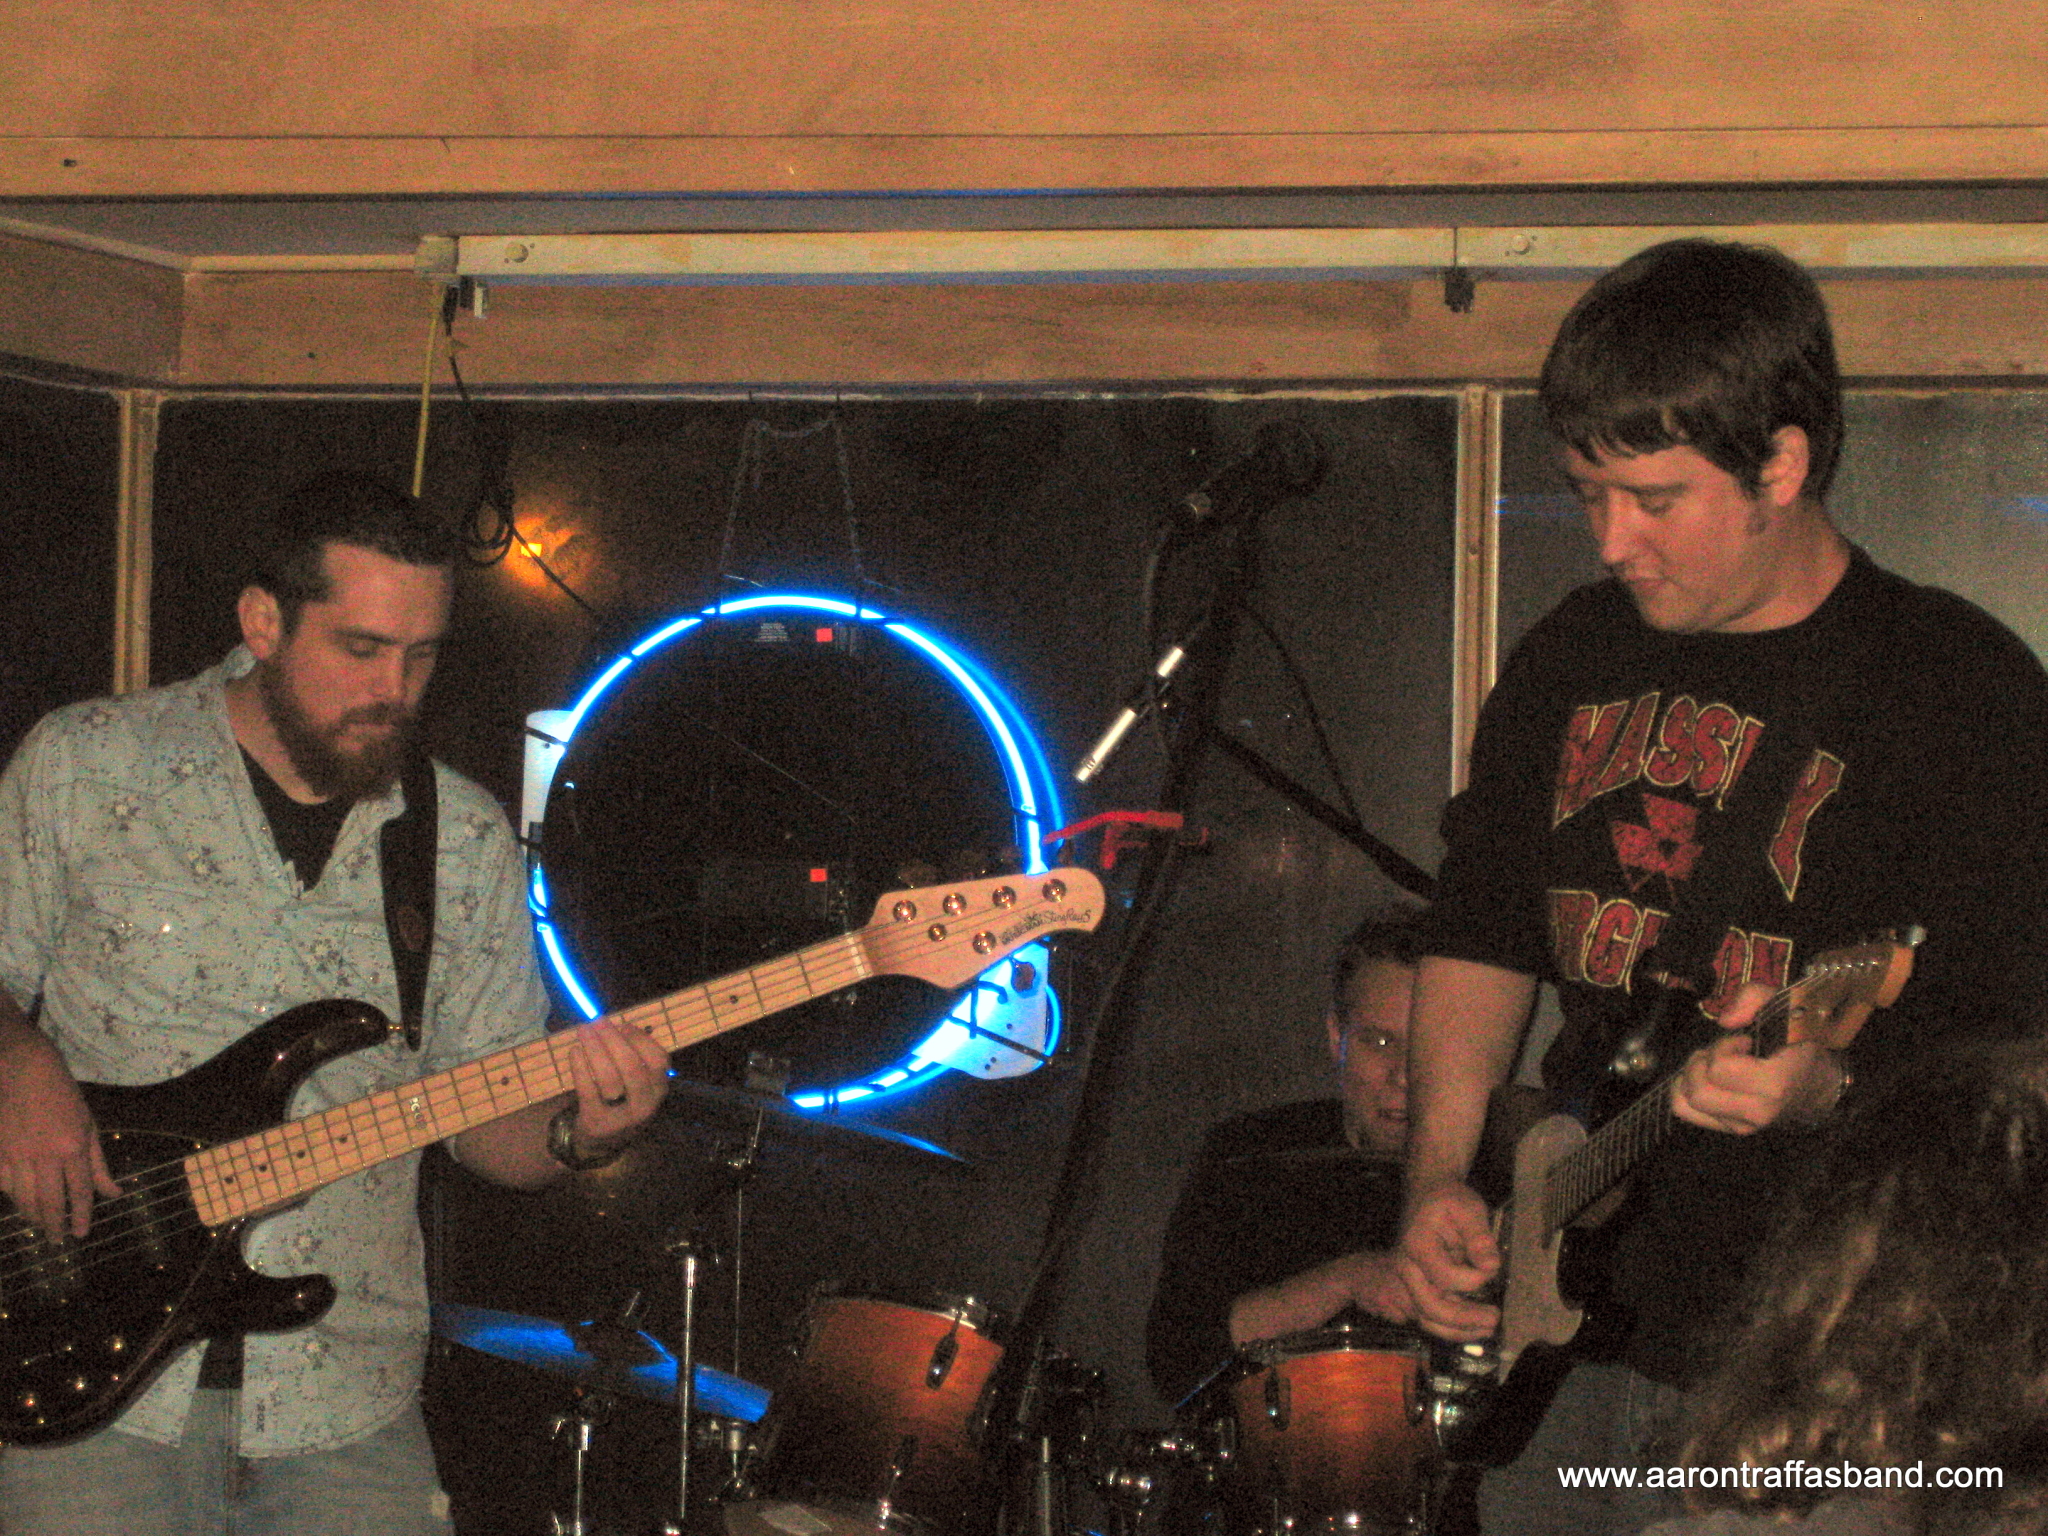 Aaron Traffas Band is Randy Miller, Mason Powell, and Aaron Traffas - live music in Baldwin City, Kansas